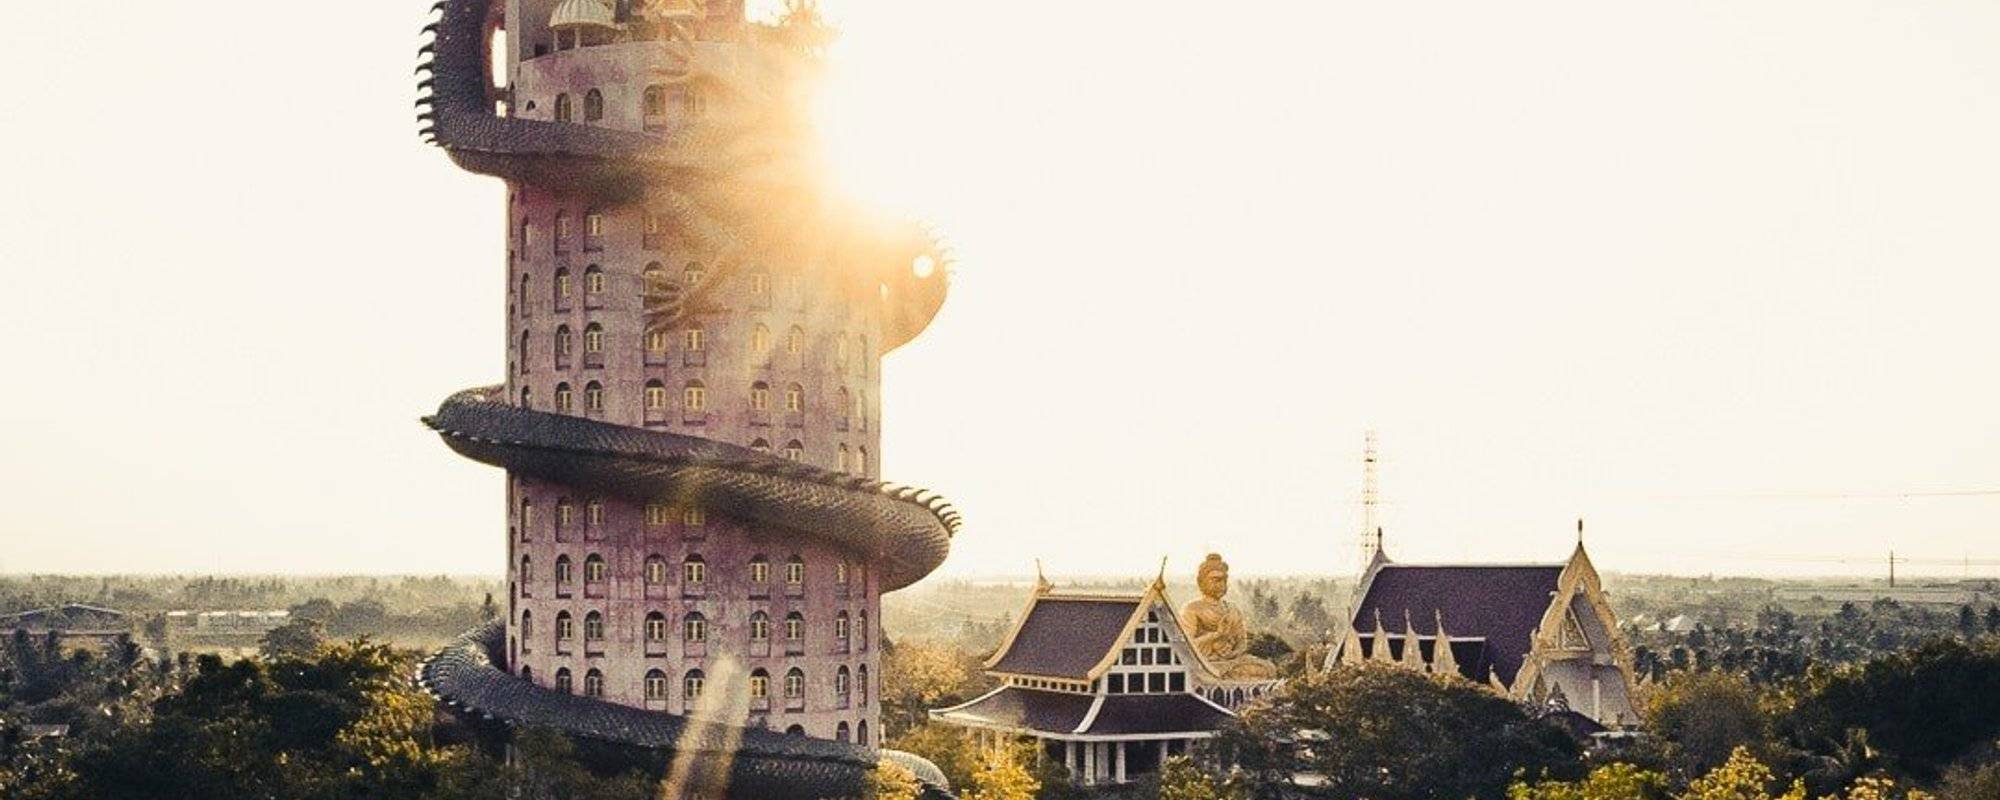 Wat Samphran: Sunset at the infamous Dragon Temple - Bangkok, Thailand